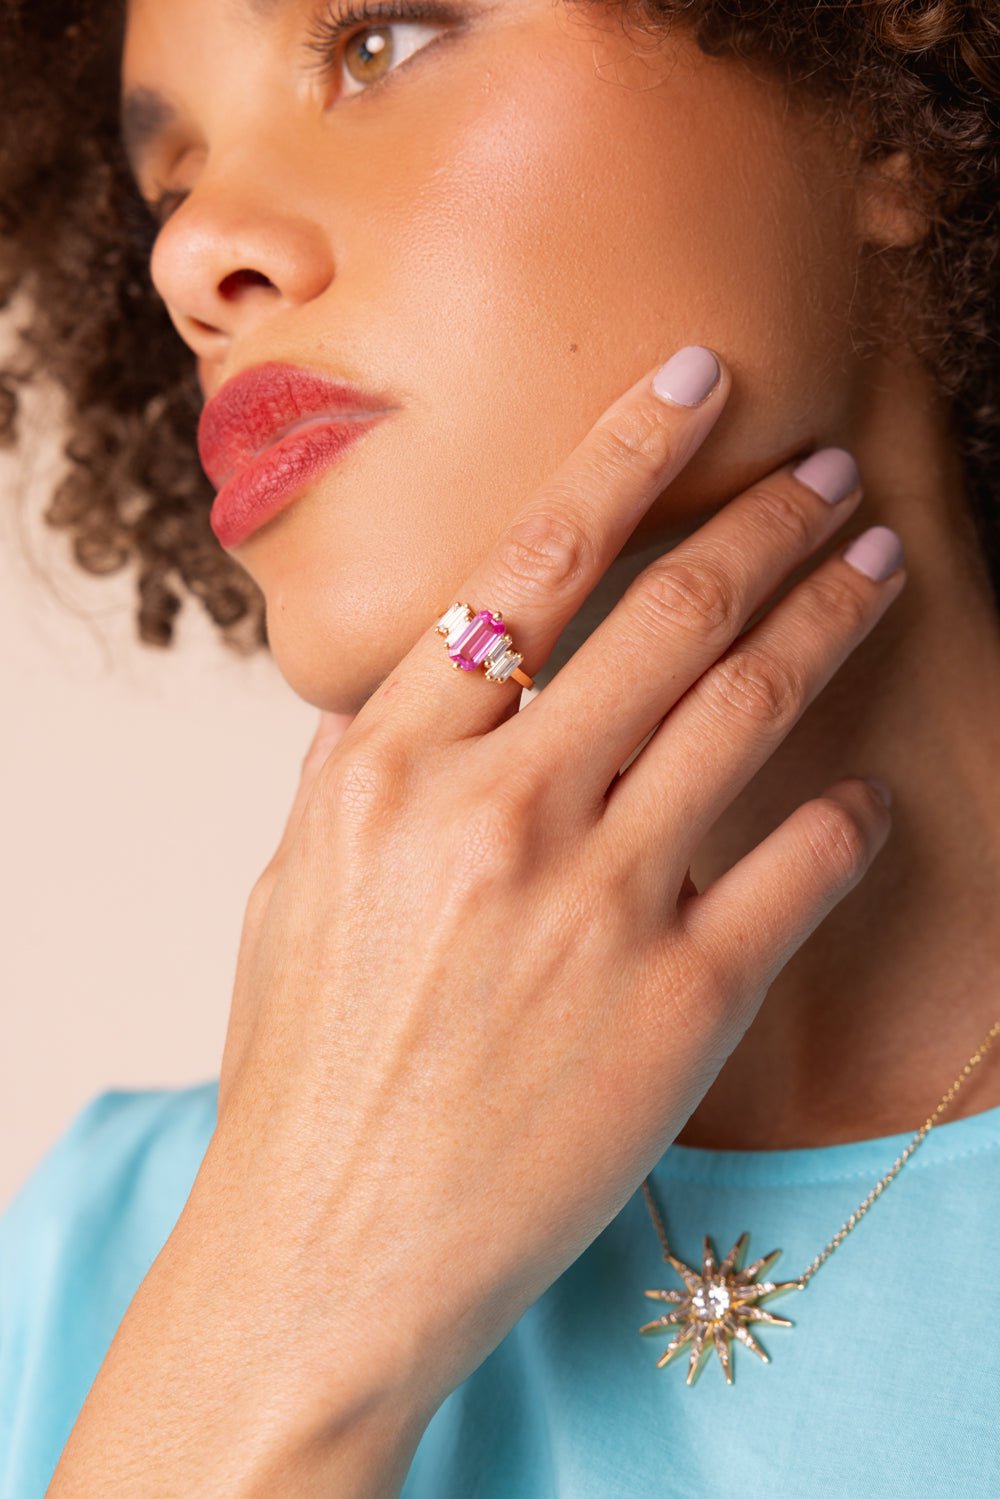 Pink Sapphire Diamond Ring JEWELRYFINE JEWELRING SUZANNE KALAN   